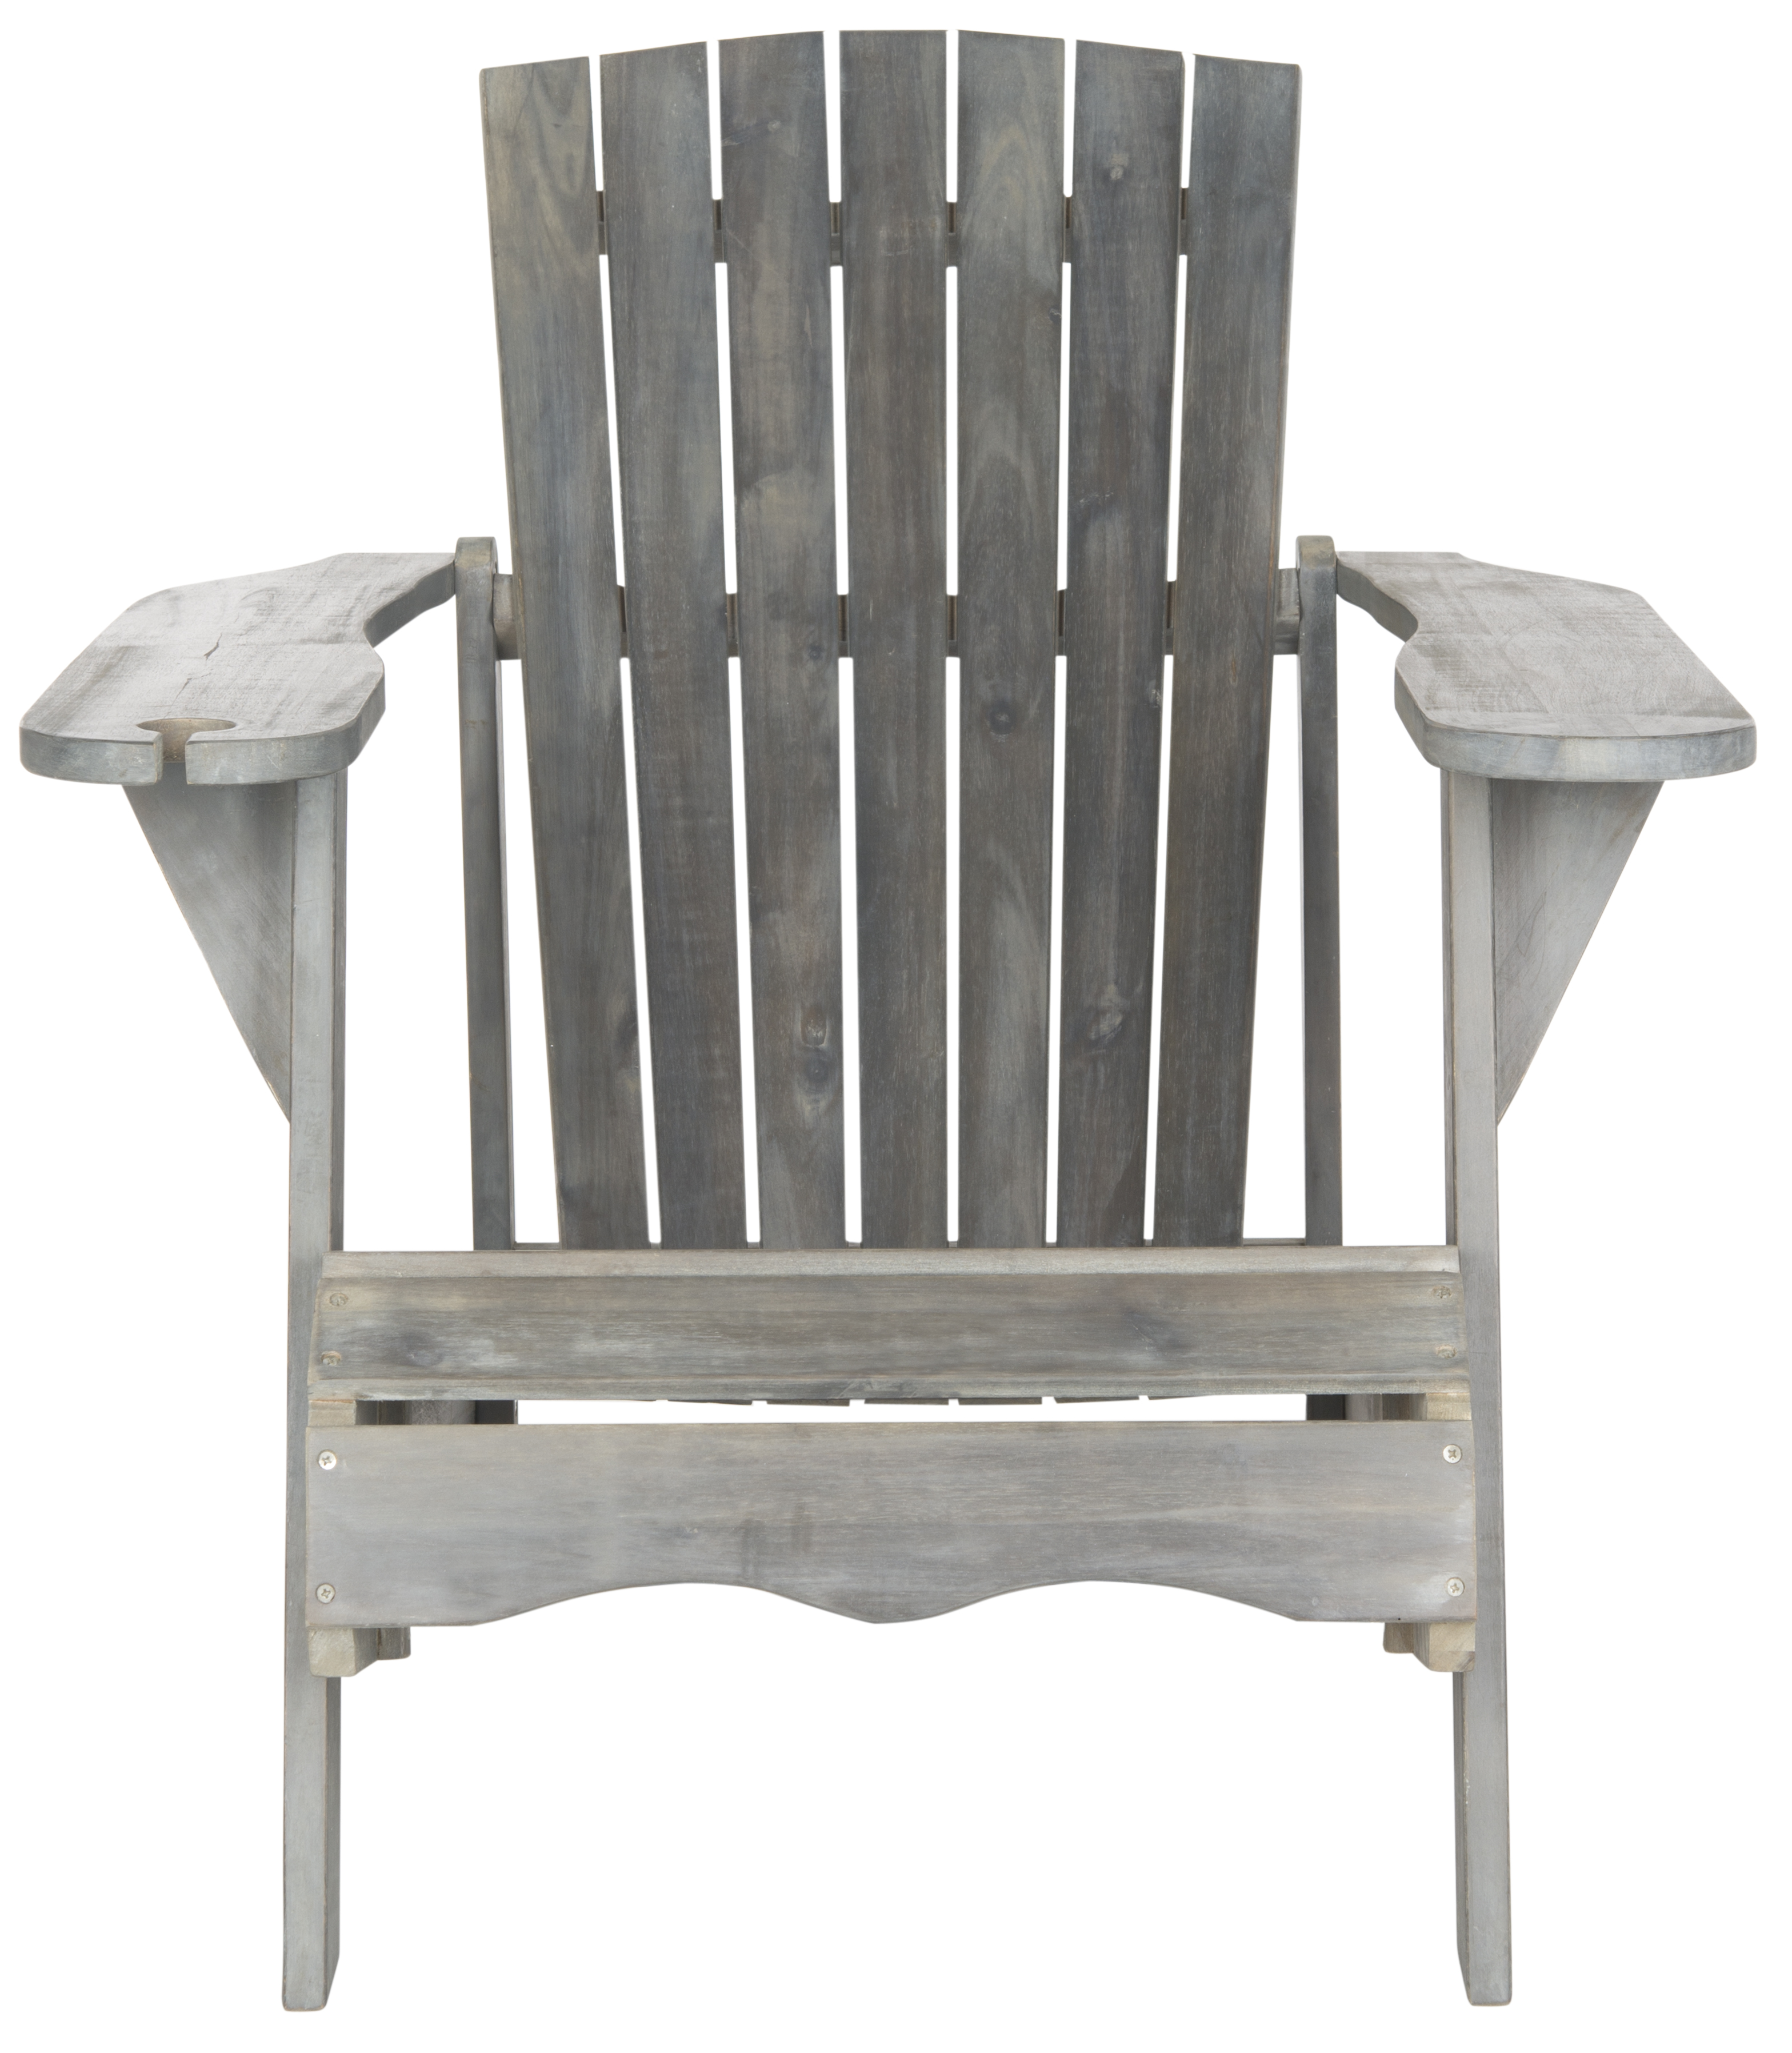 Safavieh Vista Outdoor Contemporary Adirondack Chair, Ash Gray - image 3 of 6